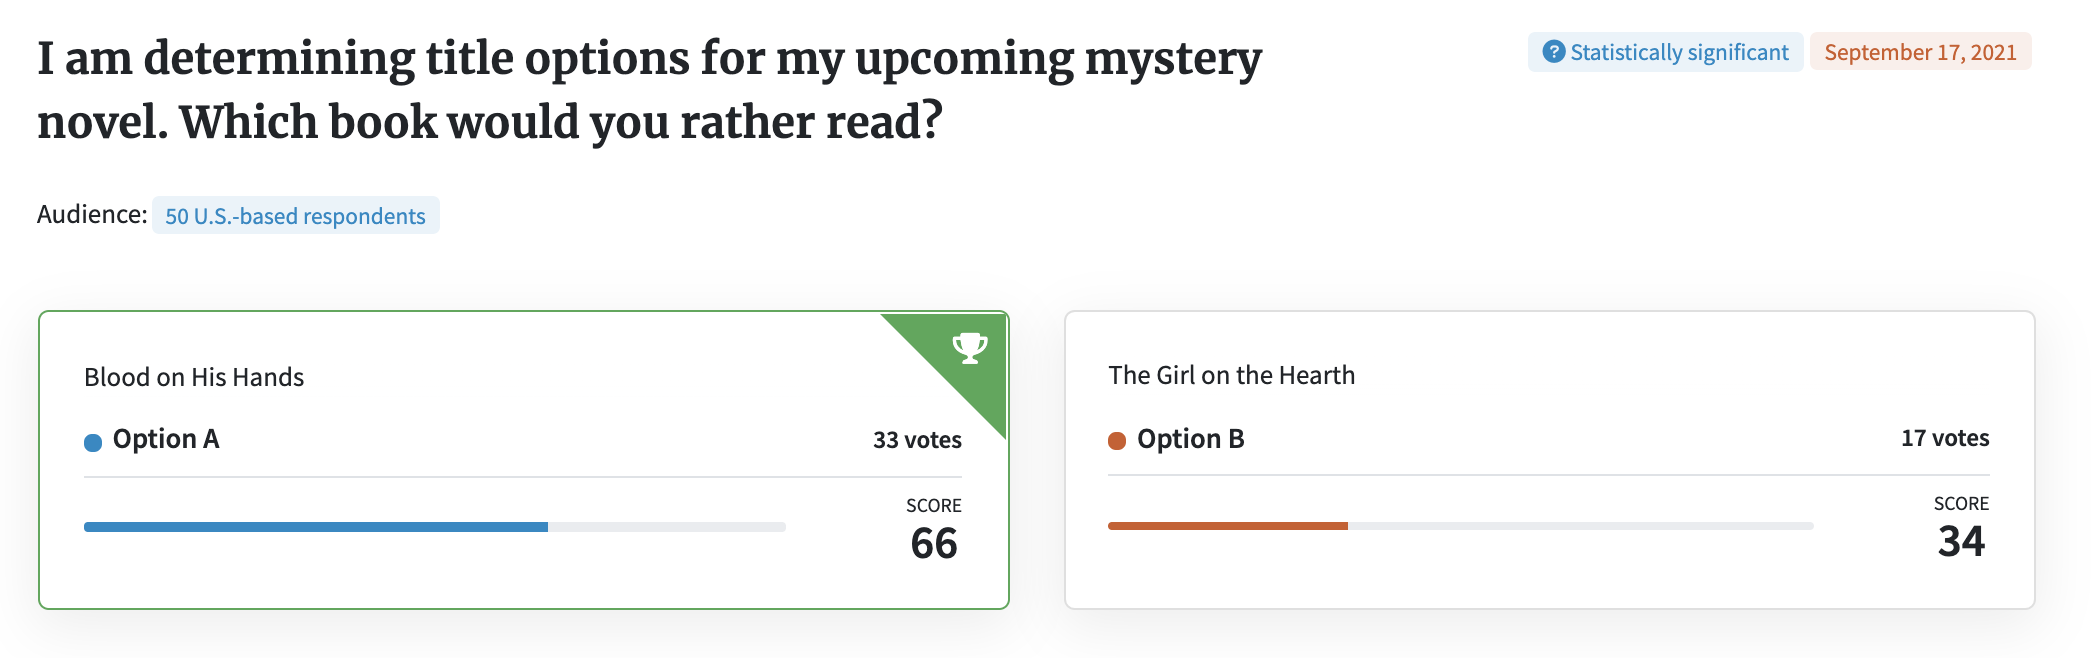 PickFu poll testing mystery book titles